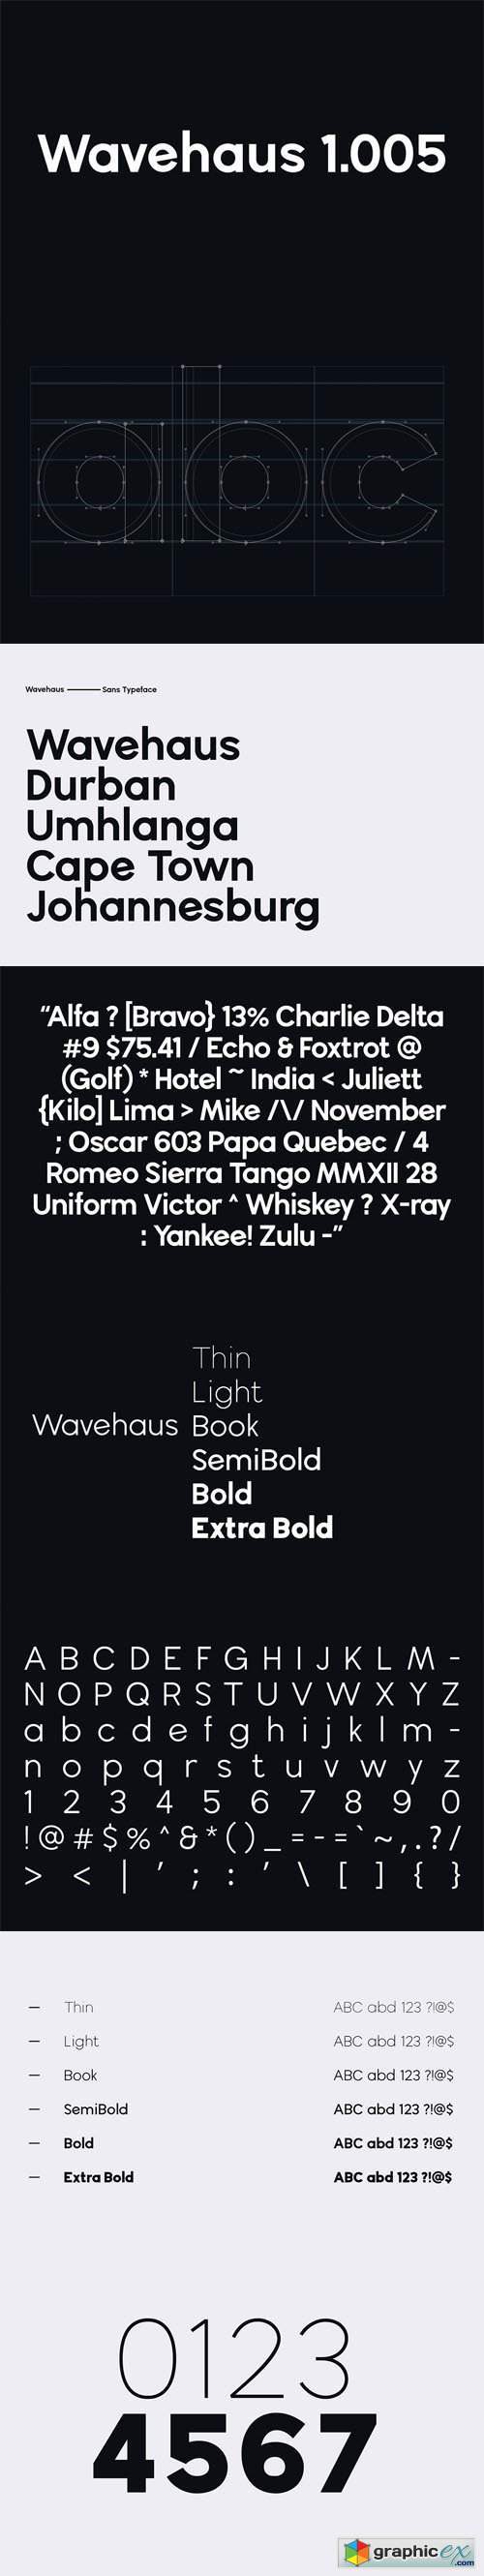 Wavehaus 1.005 Geometric Sans Serif Typeface Family [6-Weights]